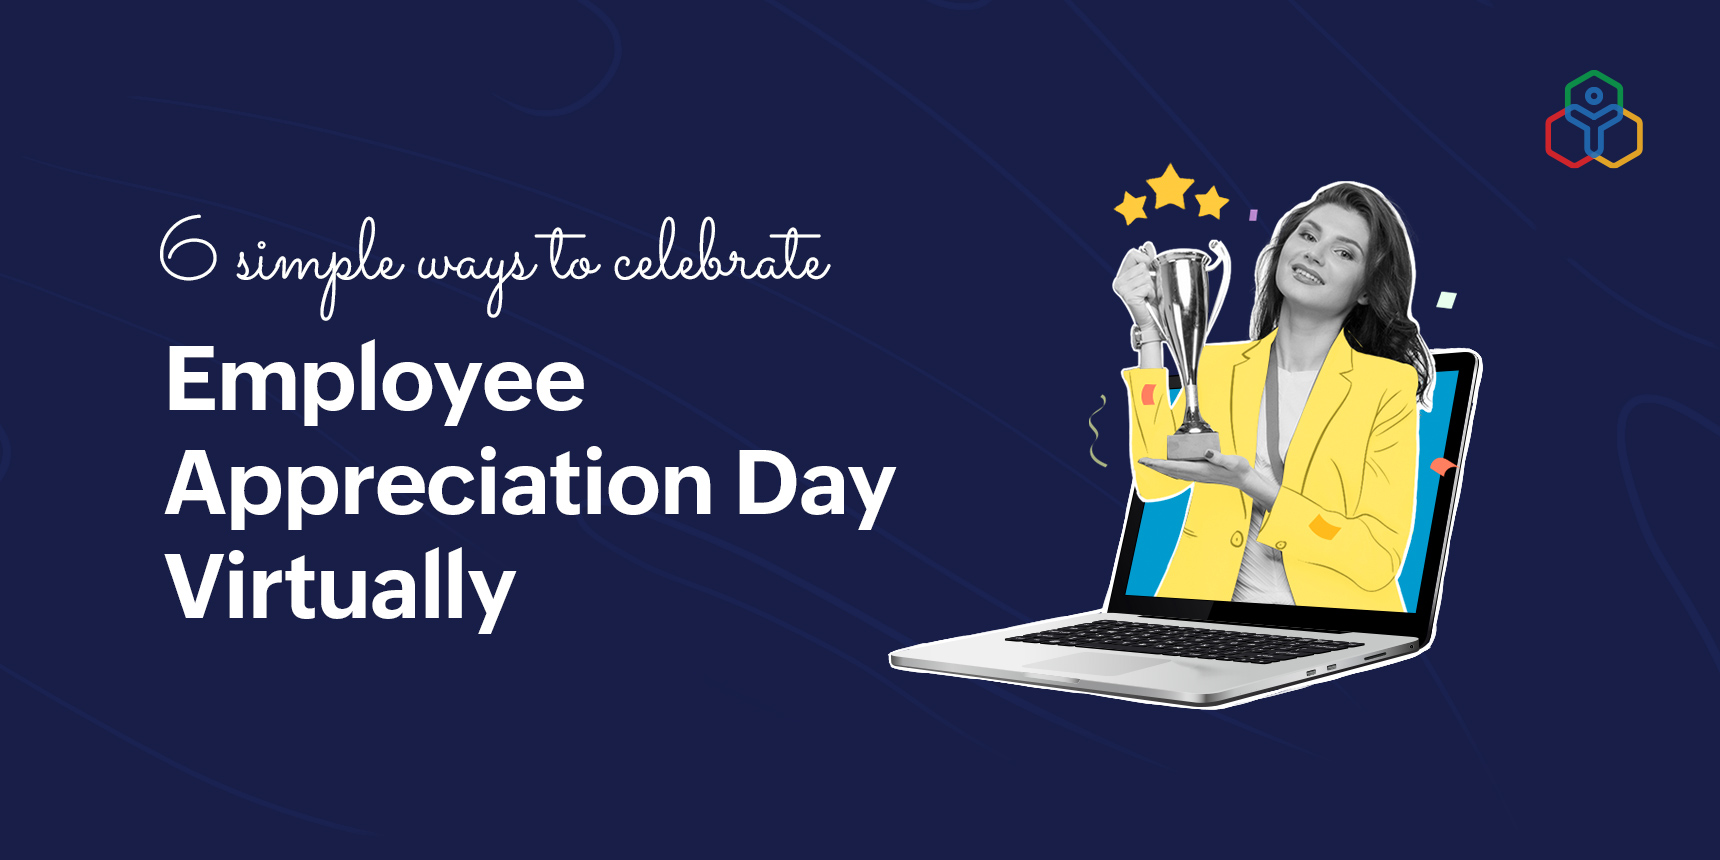 6 ways to celebrate Employee Appreciation Day virtually